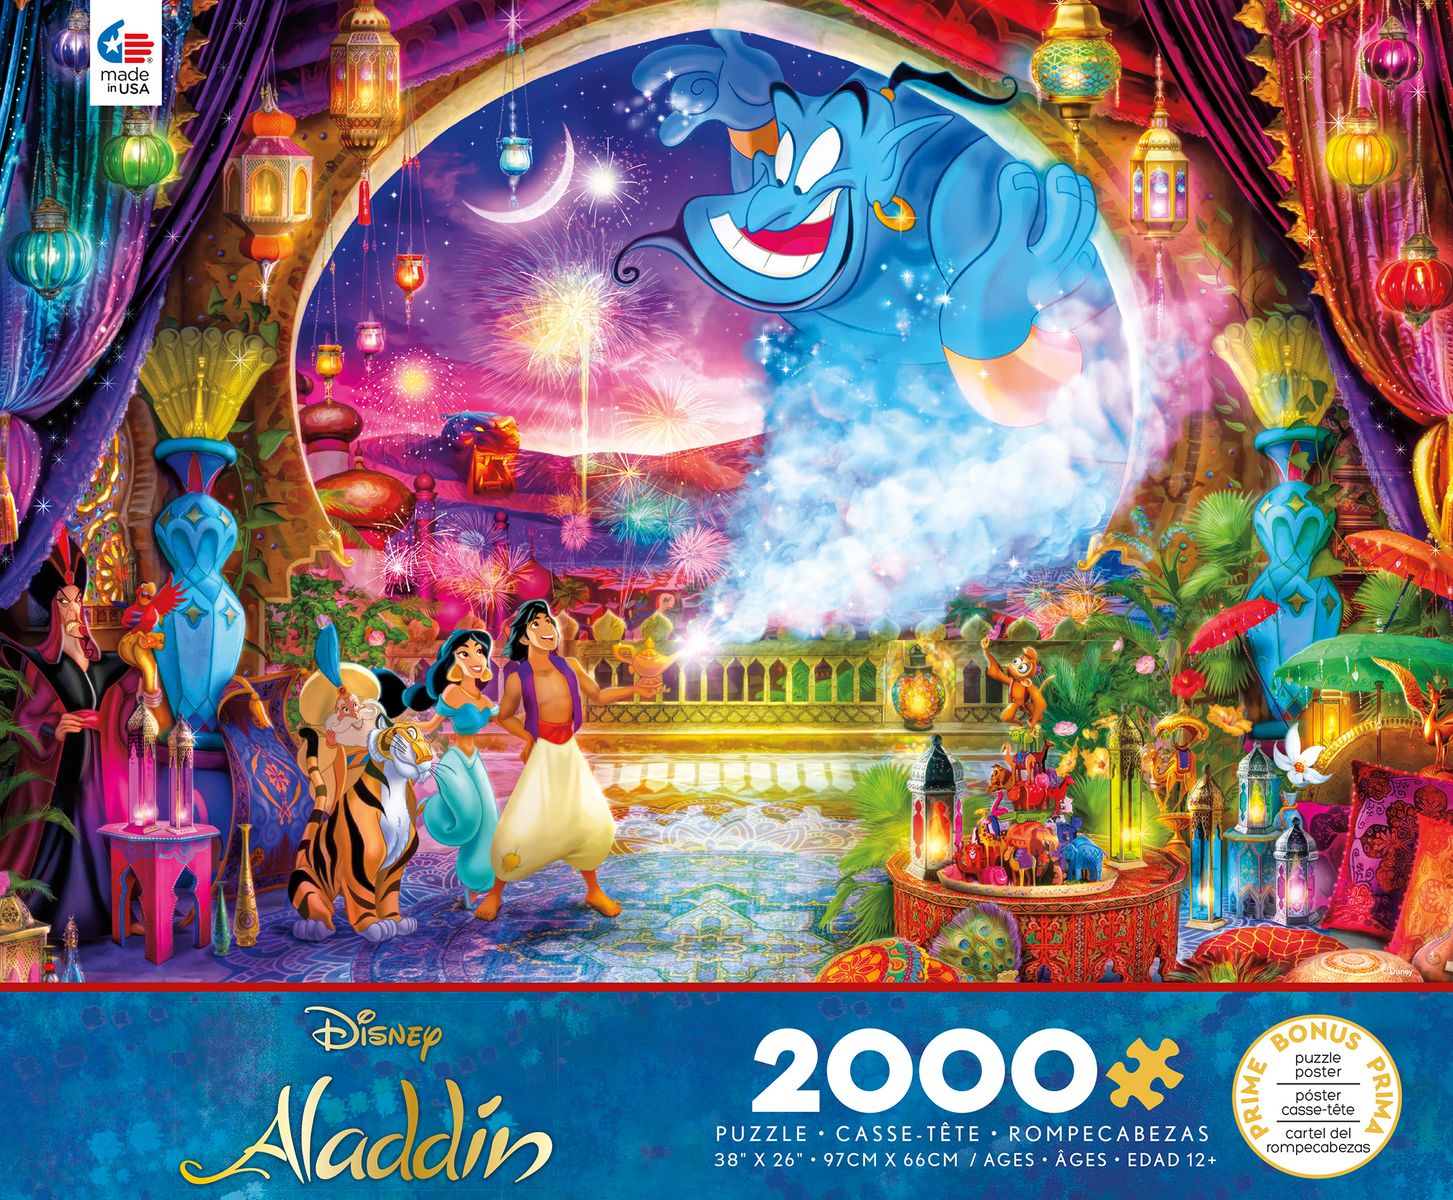 Walmart ウォルマート アメリカ 米国ウォルマート 米国最大規模スーパーマーケットWalmart市場店取扱い希望商品のご意見受付中 [送料無料] Ceaco - Disney Aladdin - 2000ピース ジグソーパズル [海外通販] | Ceaco - Disney Aladdin - 2000 Piece Jigsaw Puzzle